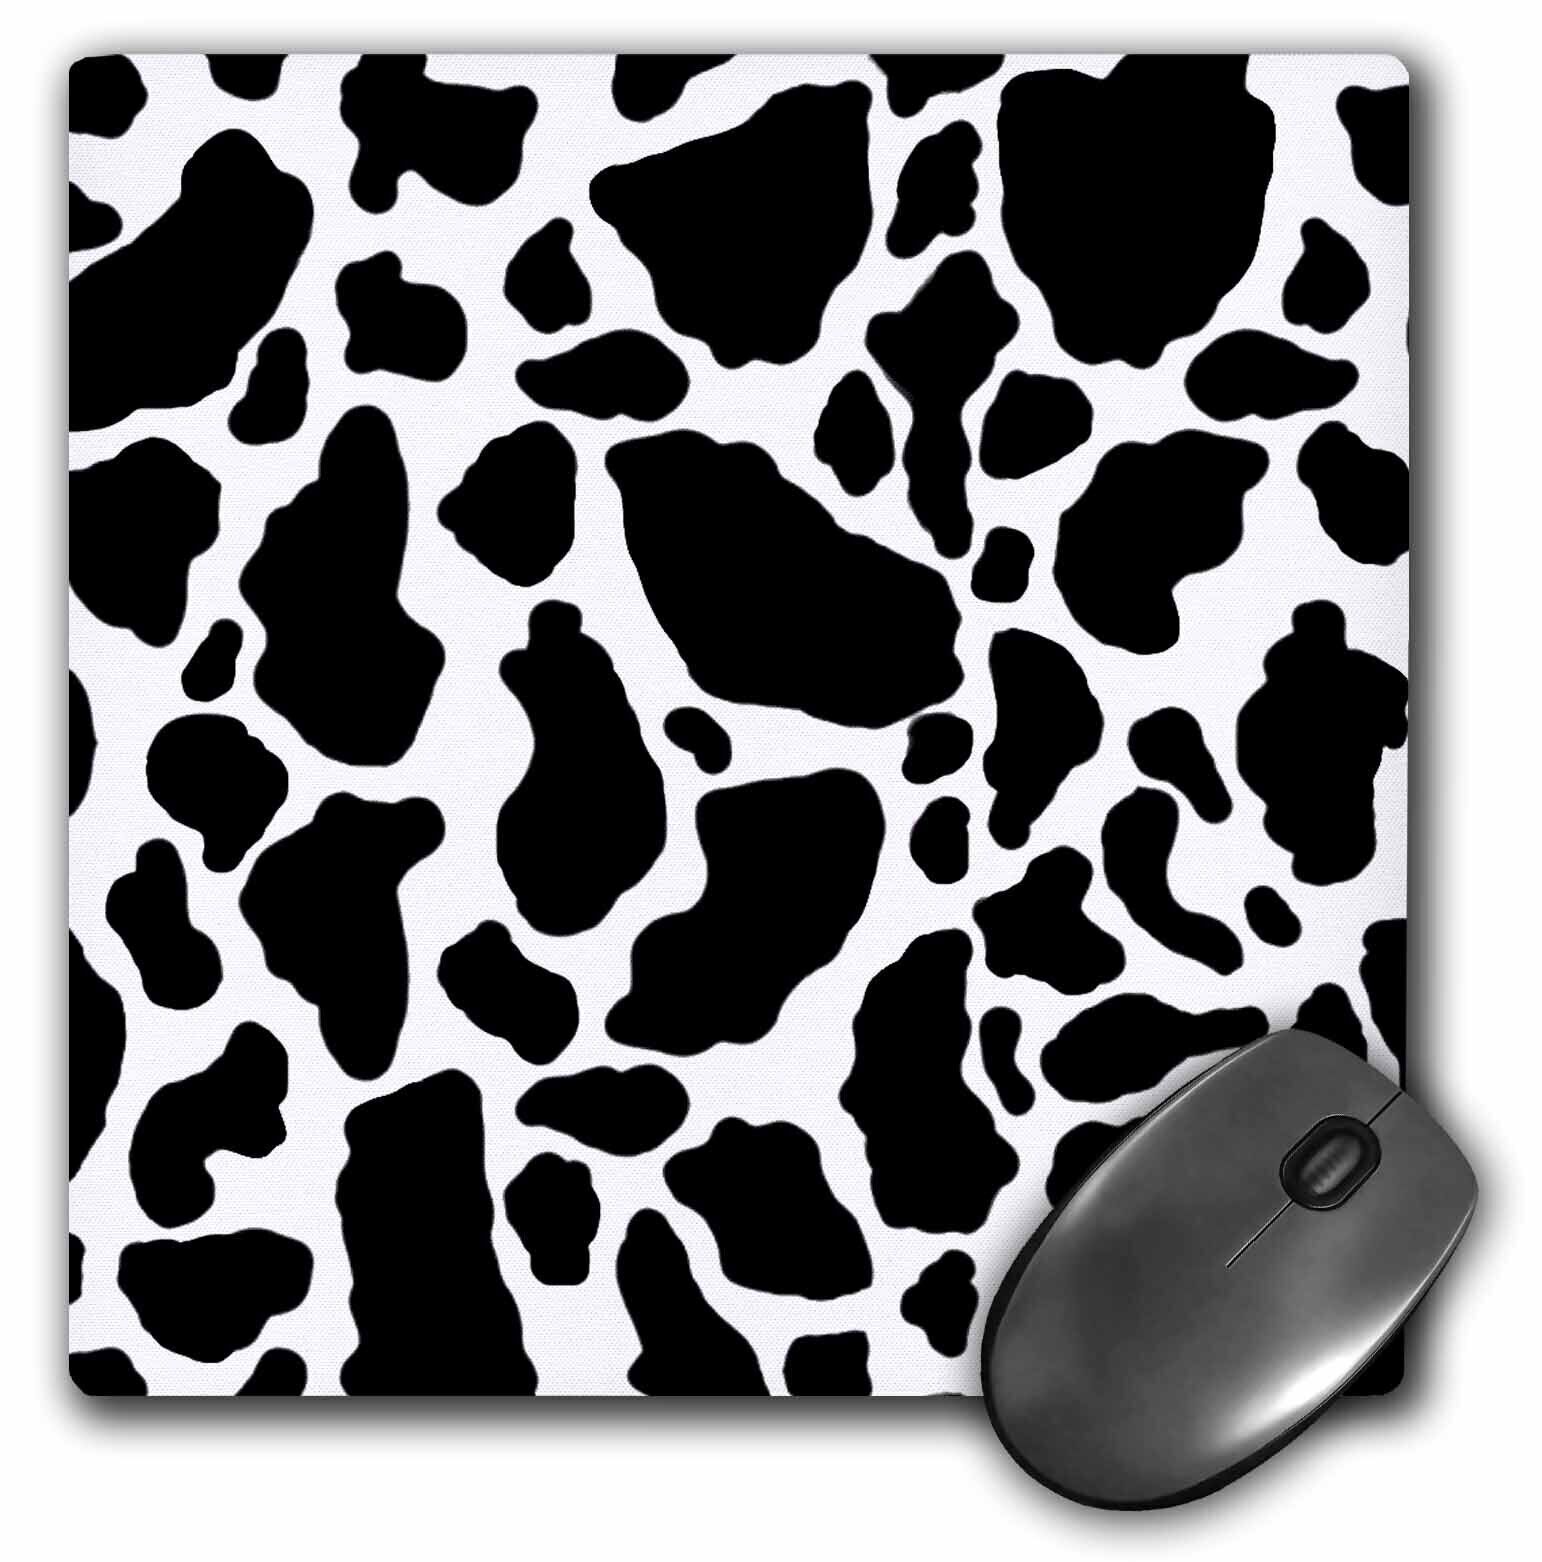 3dRose Black and White Cow Print MousePad